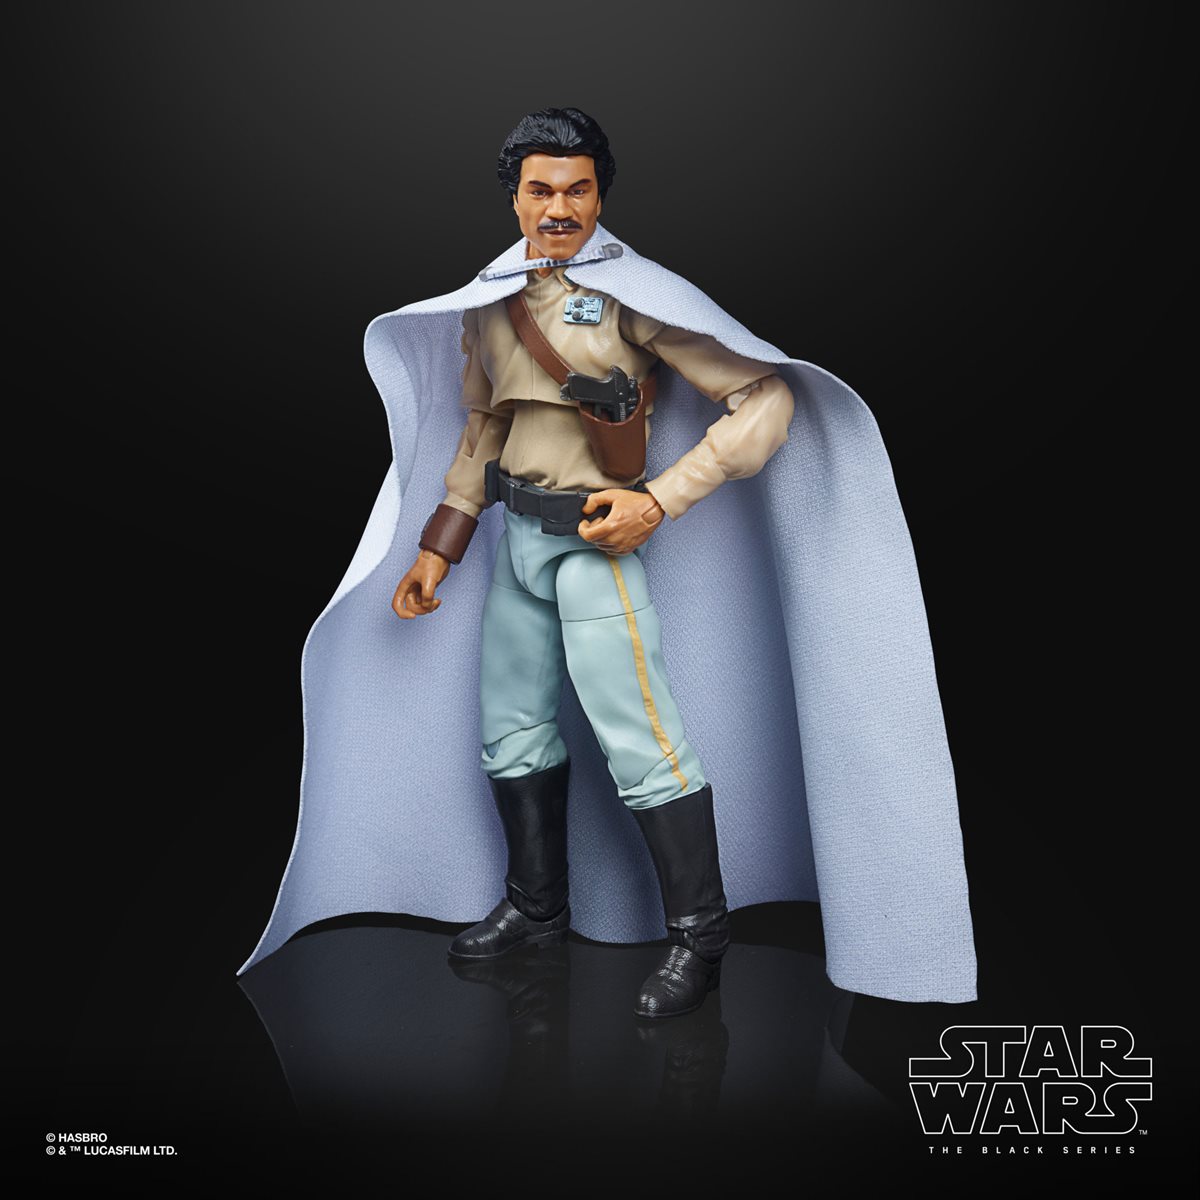 Hasbro Star Wars The Black Series Lando Calrissian 6-inch Action Figure for sale online 